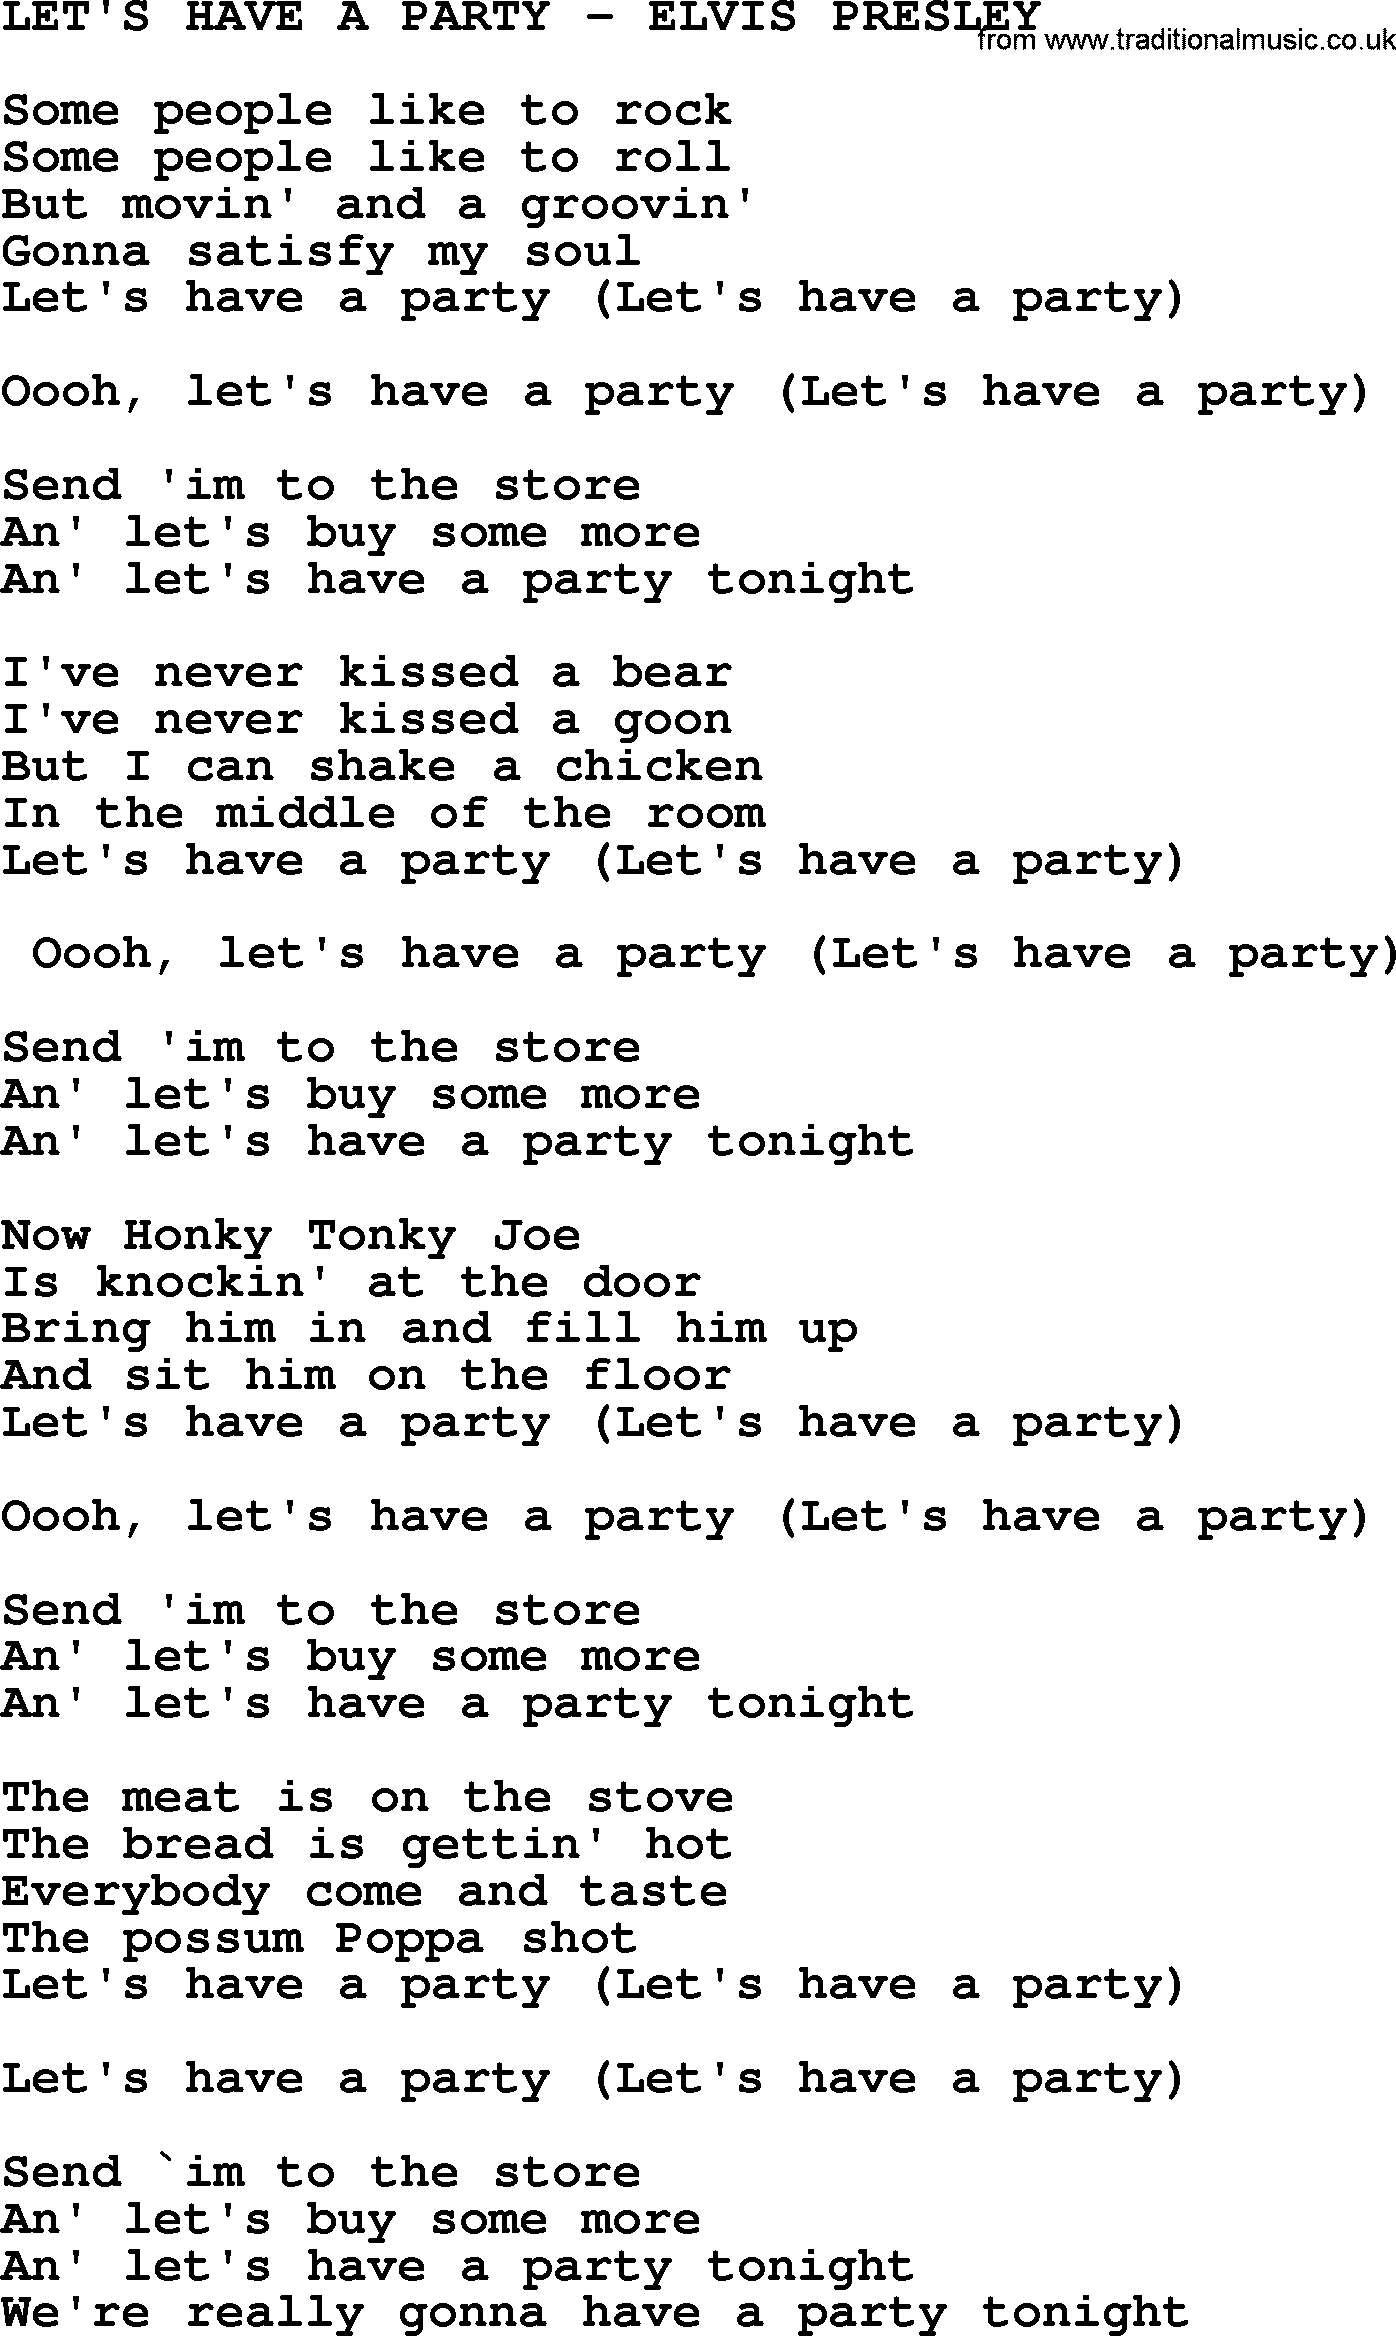 Elvis Presley song: Let's Have A Party-Elvis Presley-.txt lyrics and chords